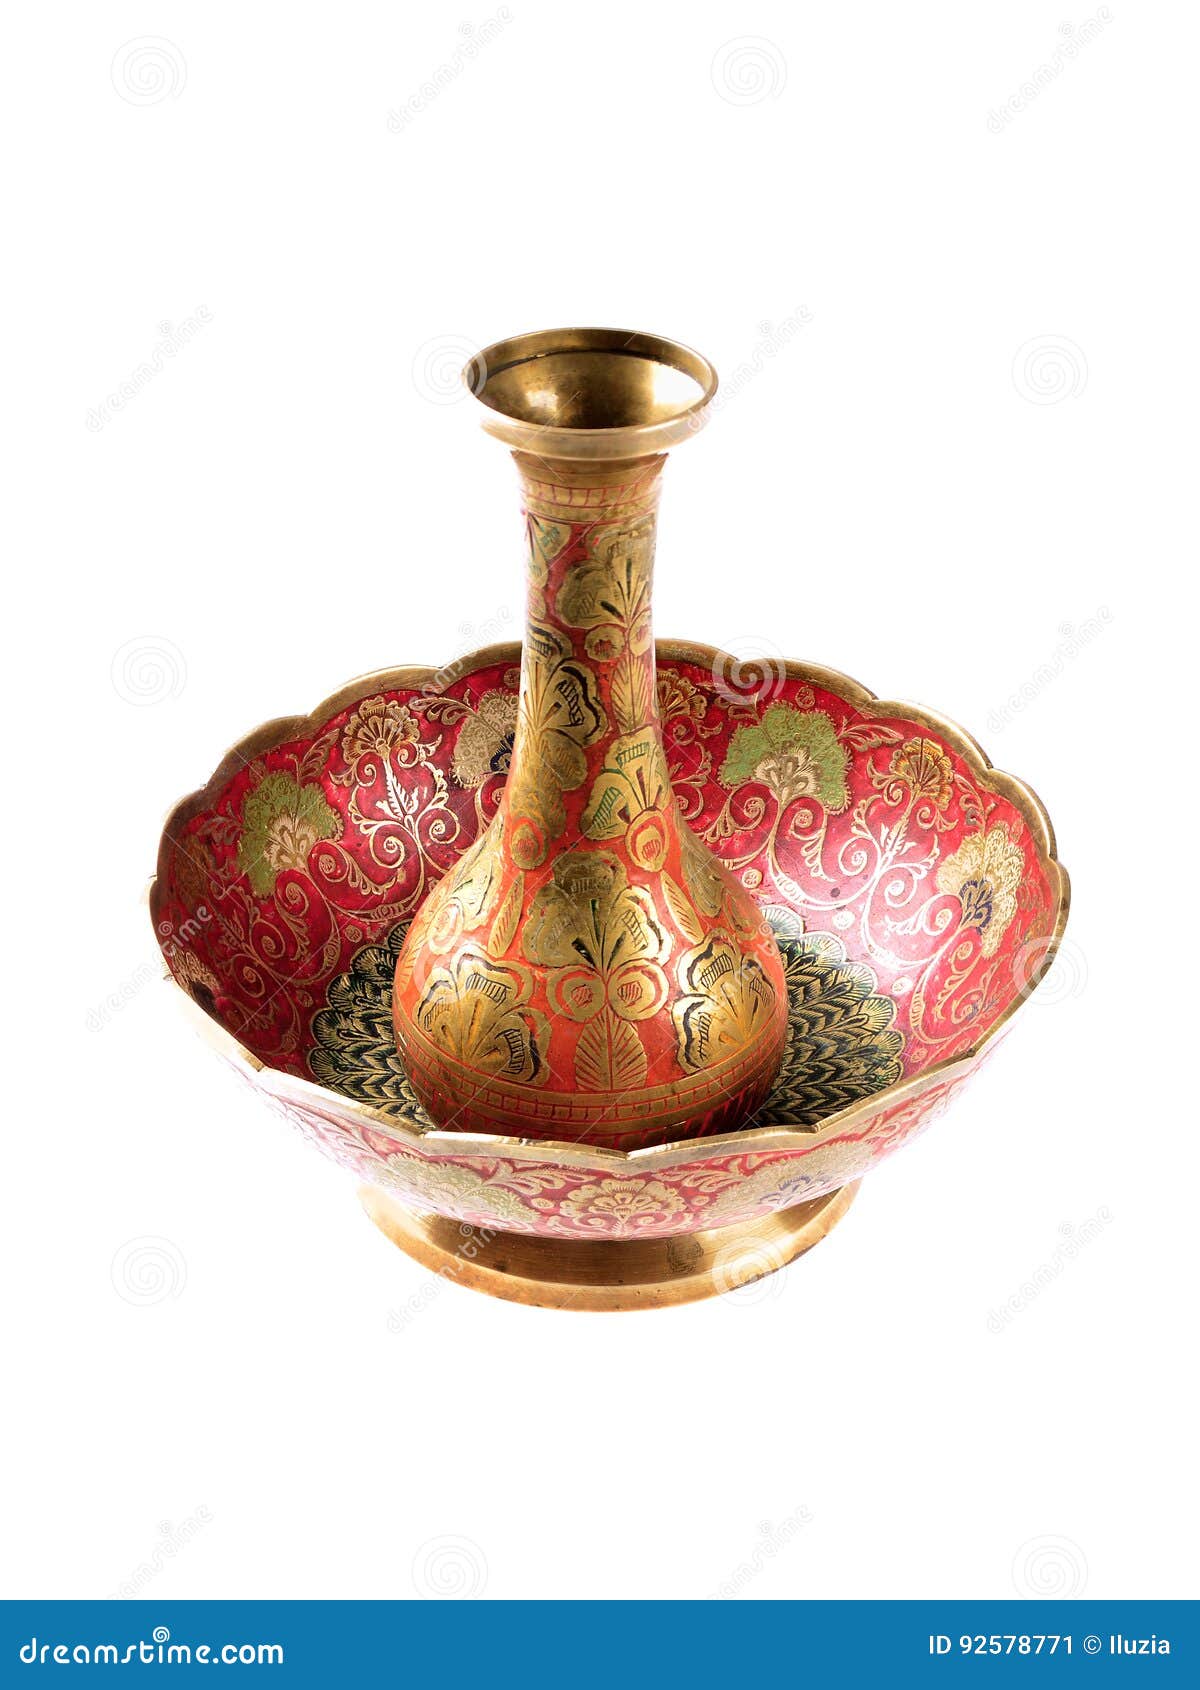 212 Indian Antique Brass Vase Stock Photos - Free & Royalty-Free